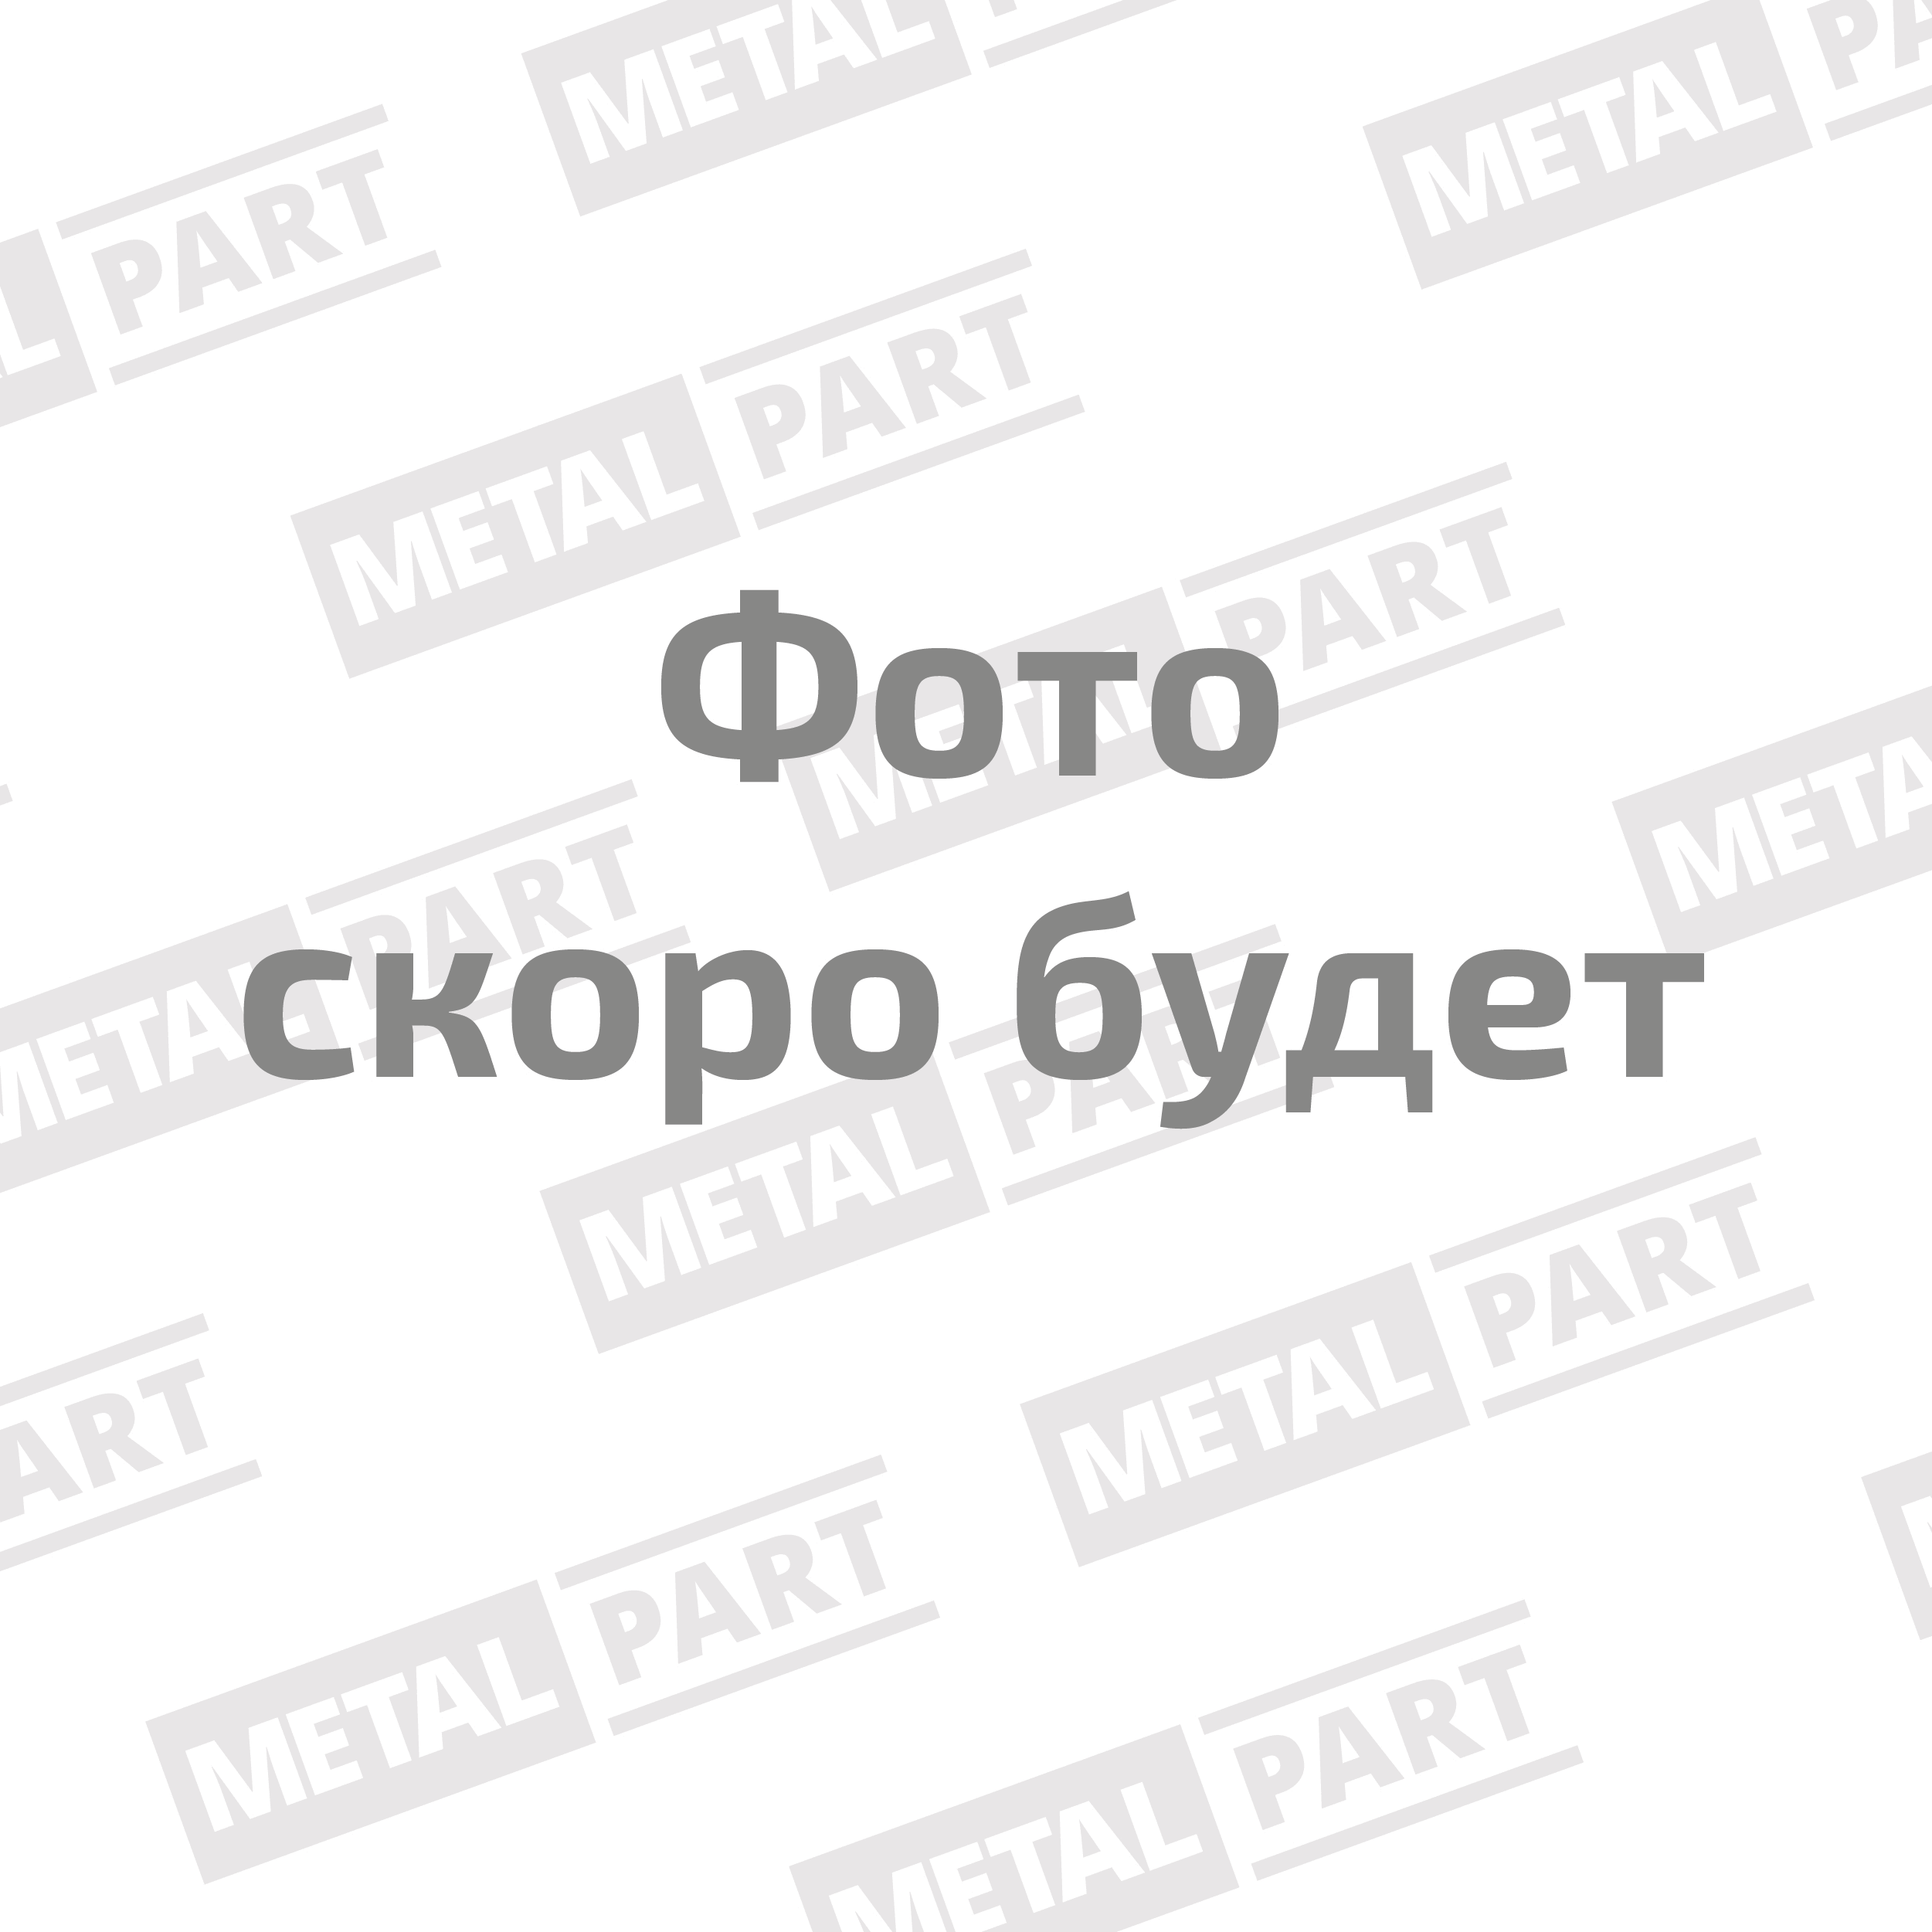 Датчик фазы MetalPart для автомобилей "УАЗ", "ГАЗ" с двиг. ЗМЗ 405,406, 409 УМЗ 4213, 4216